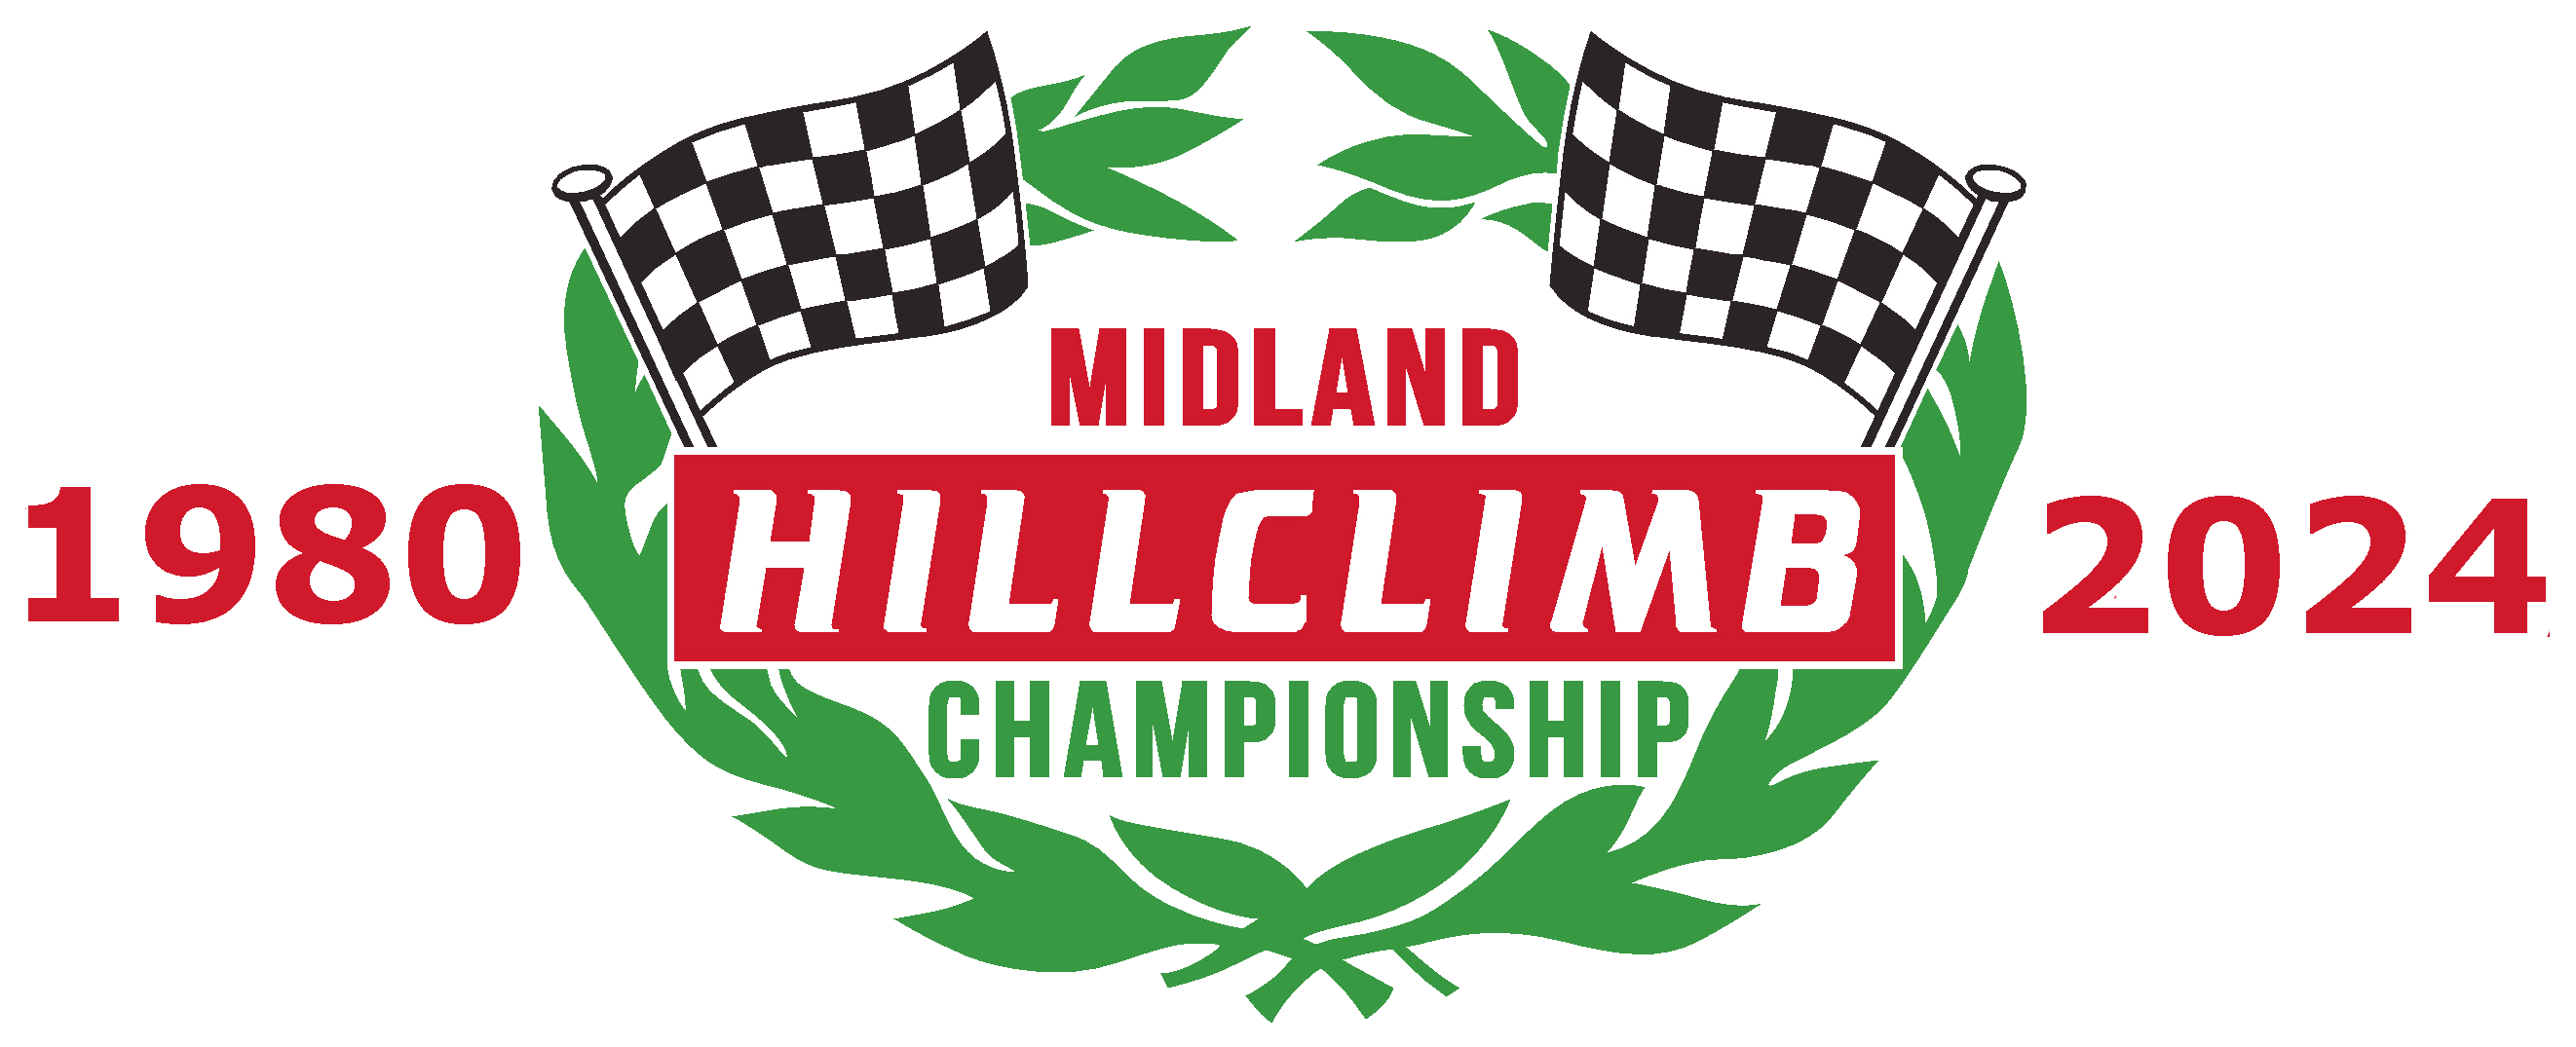 Midland Hillclimb 2024 logo